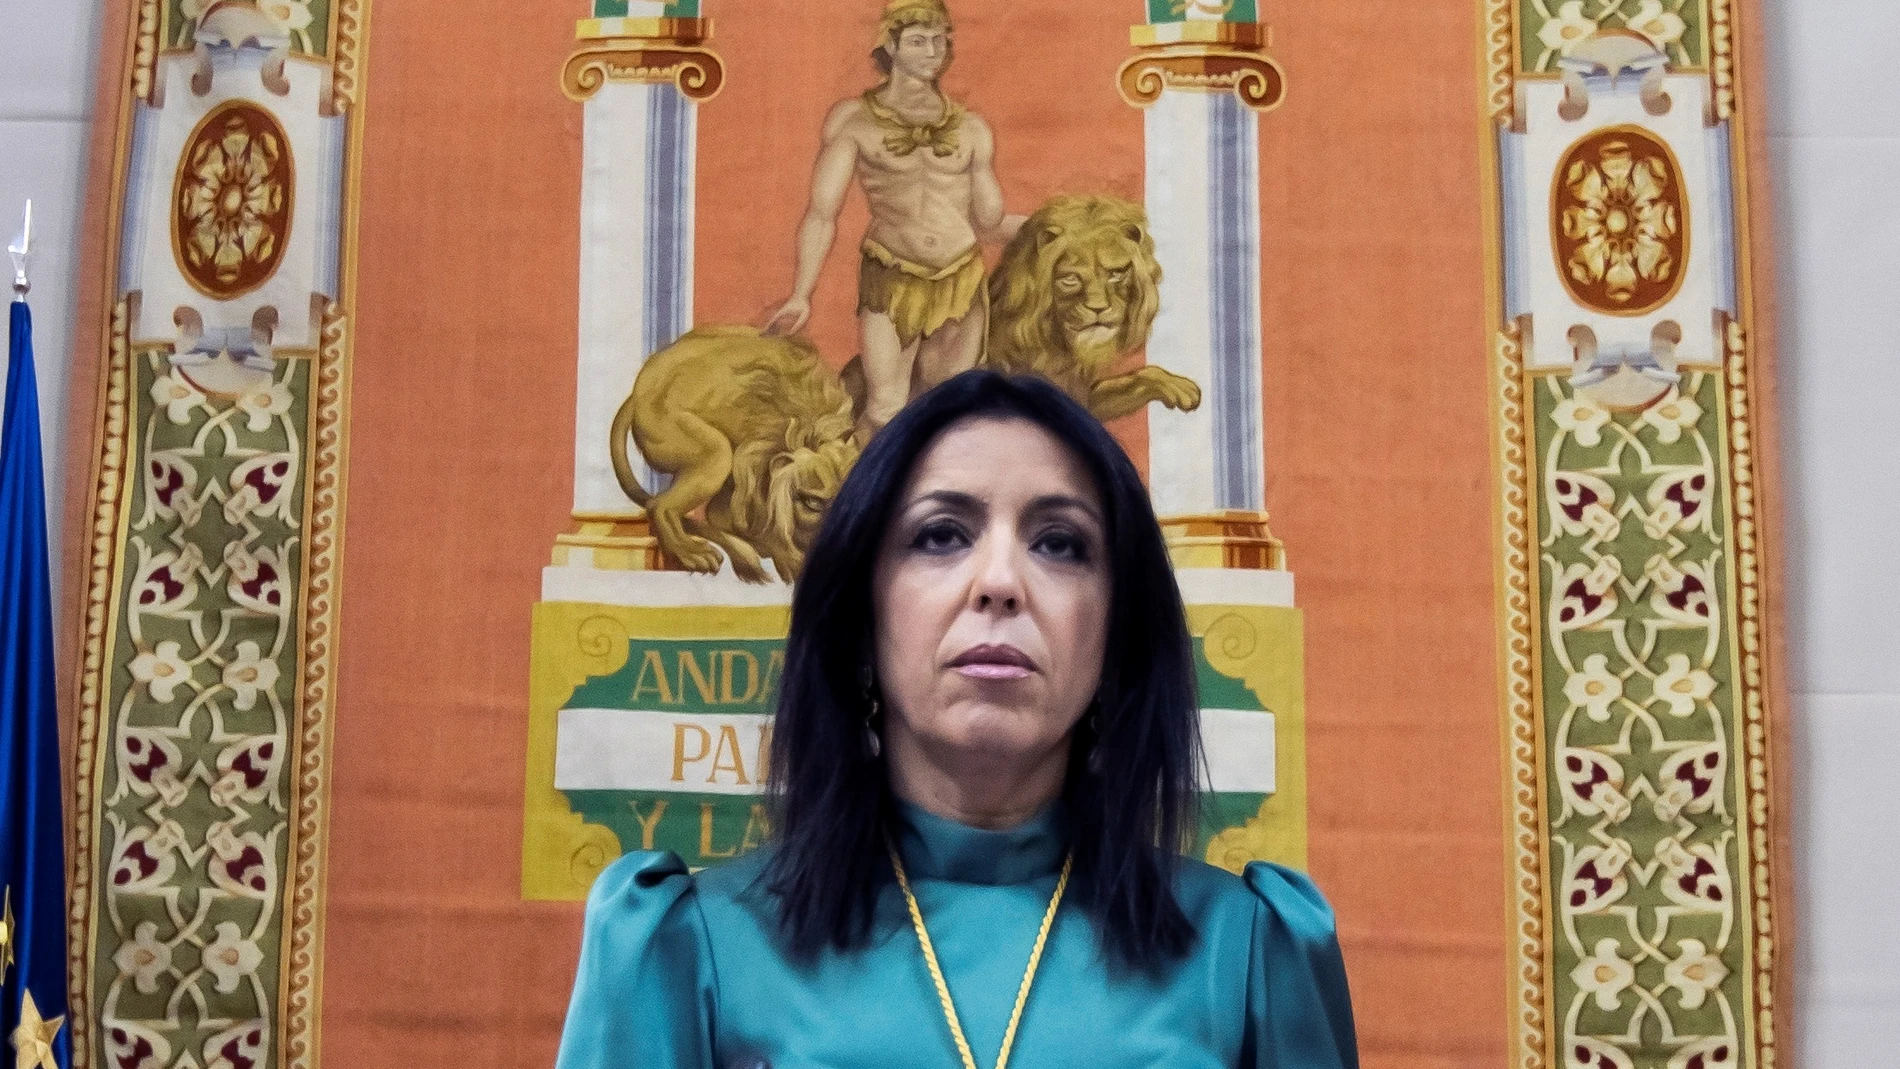 La presidenta de la Cámara autonómica andaluza, Marta Bosquet